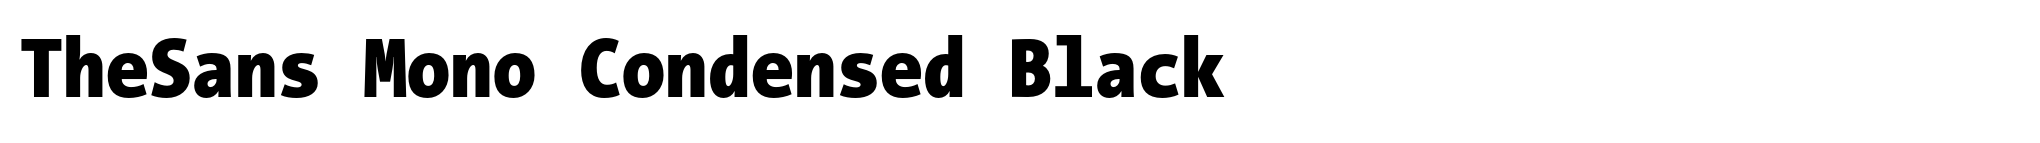 TheSans Mono Condensed Black image